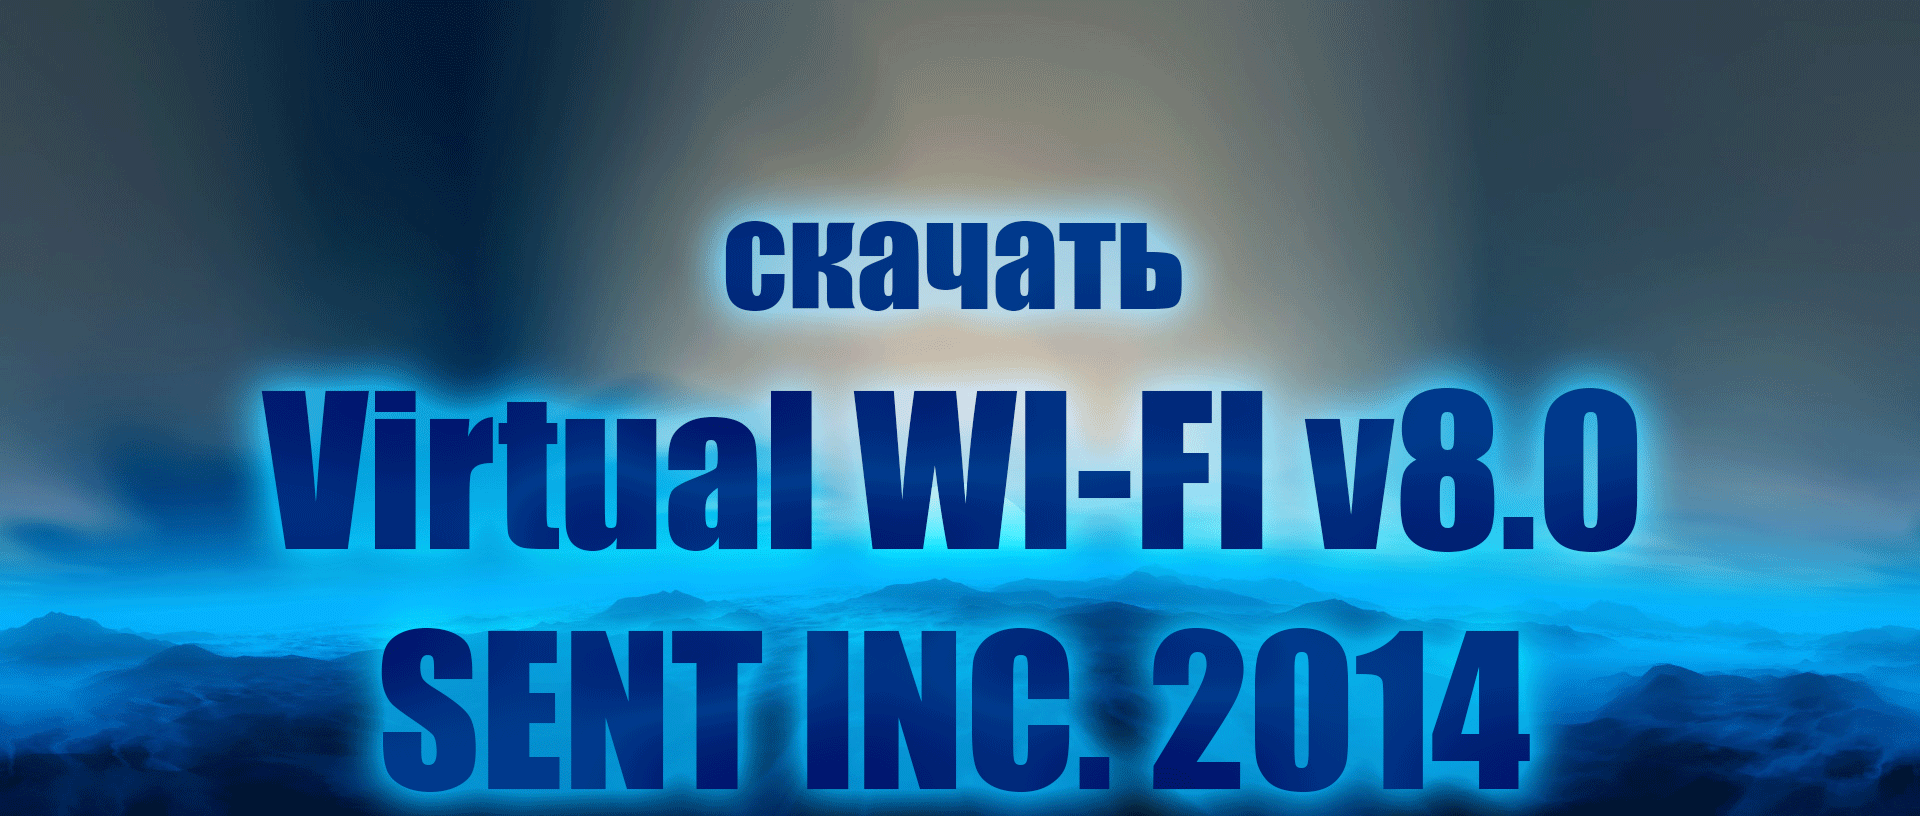 Страница программы Virtual WI-FI v7.2